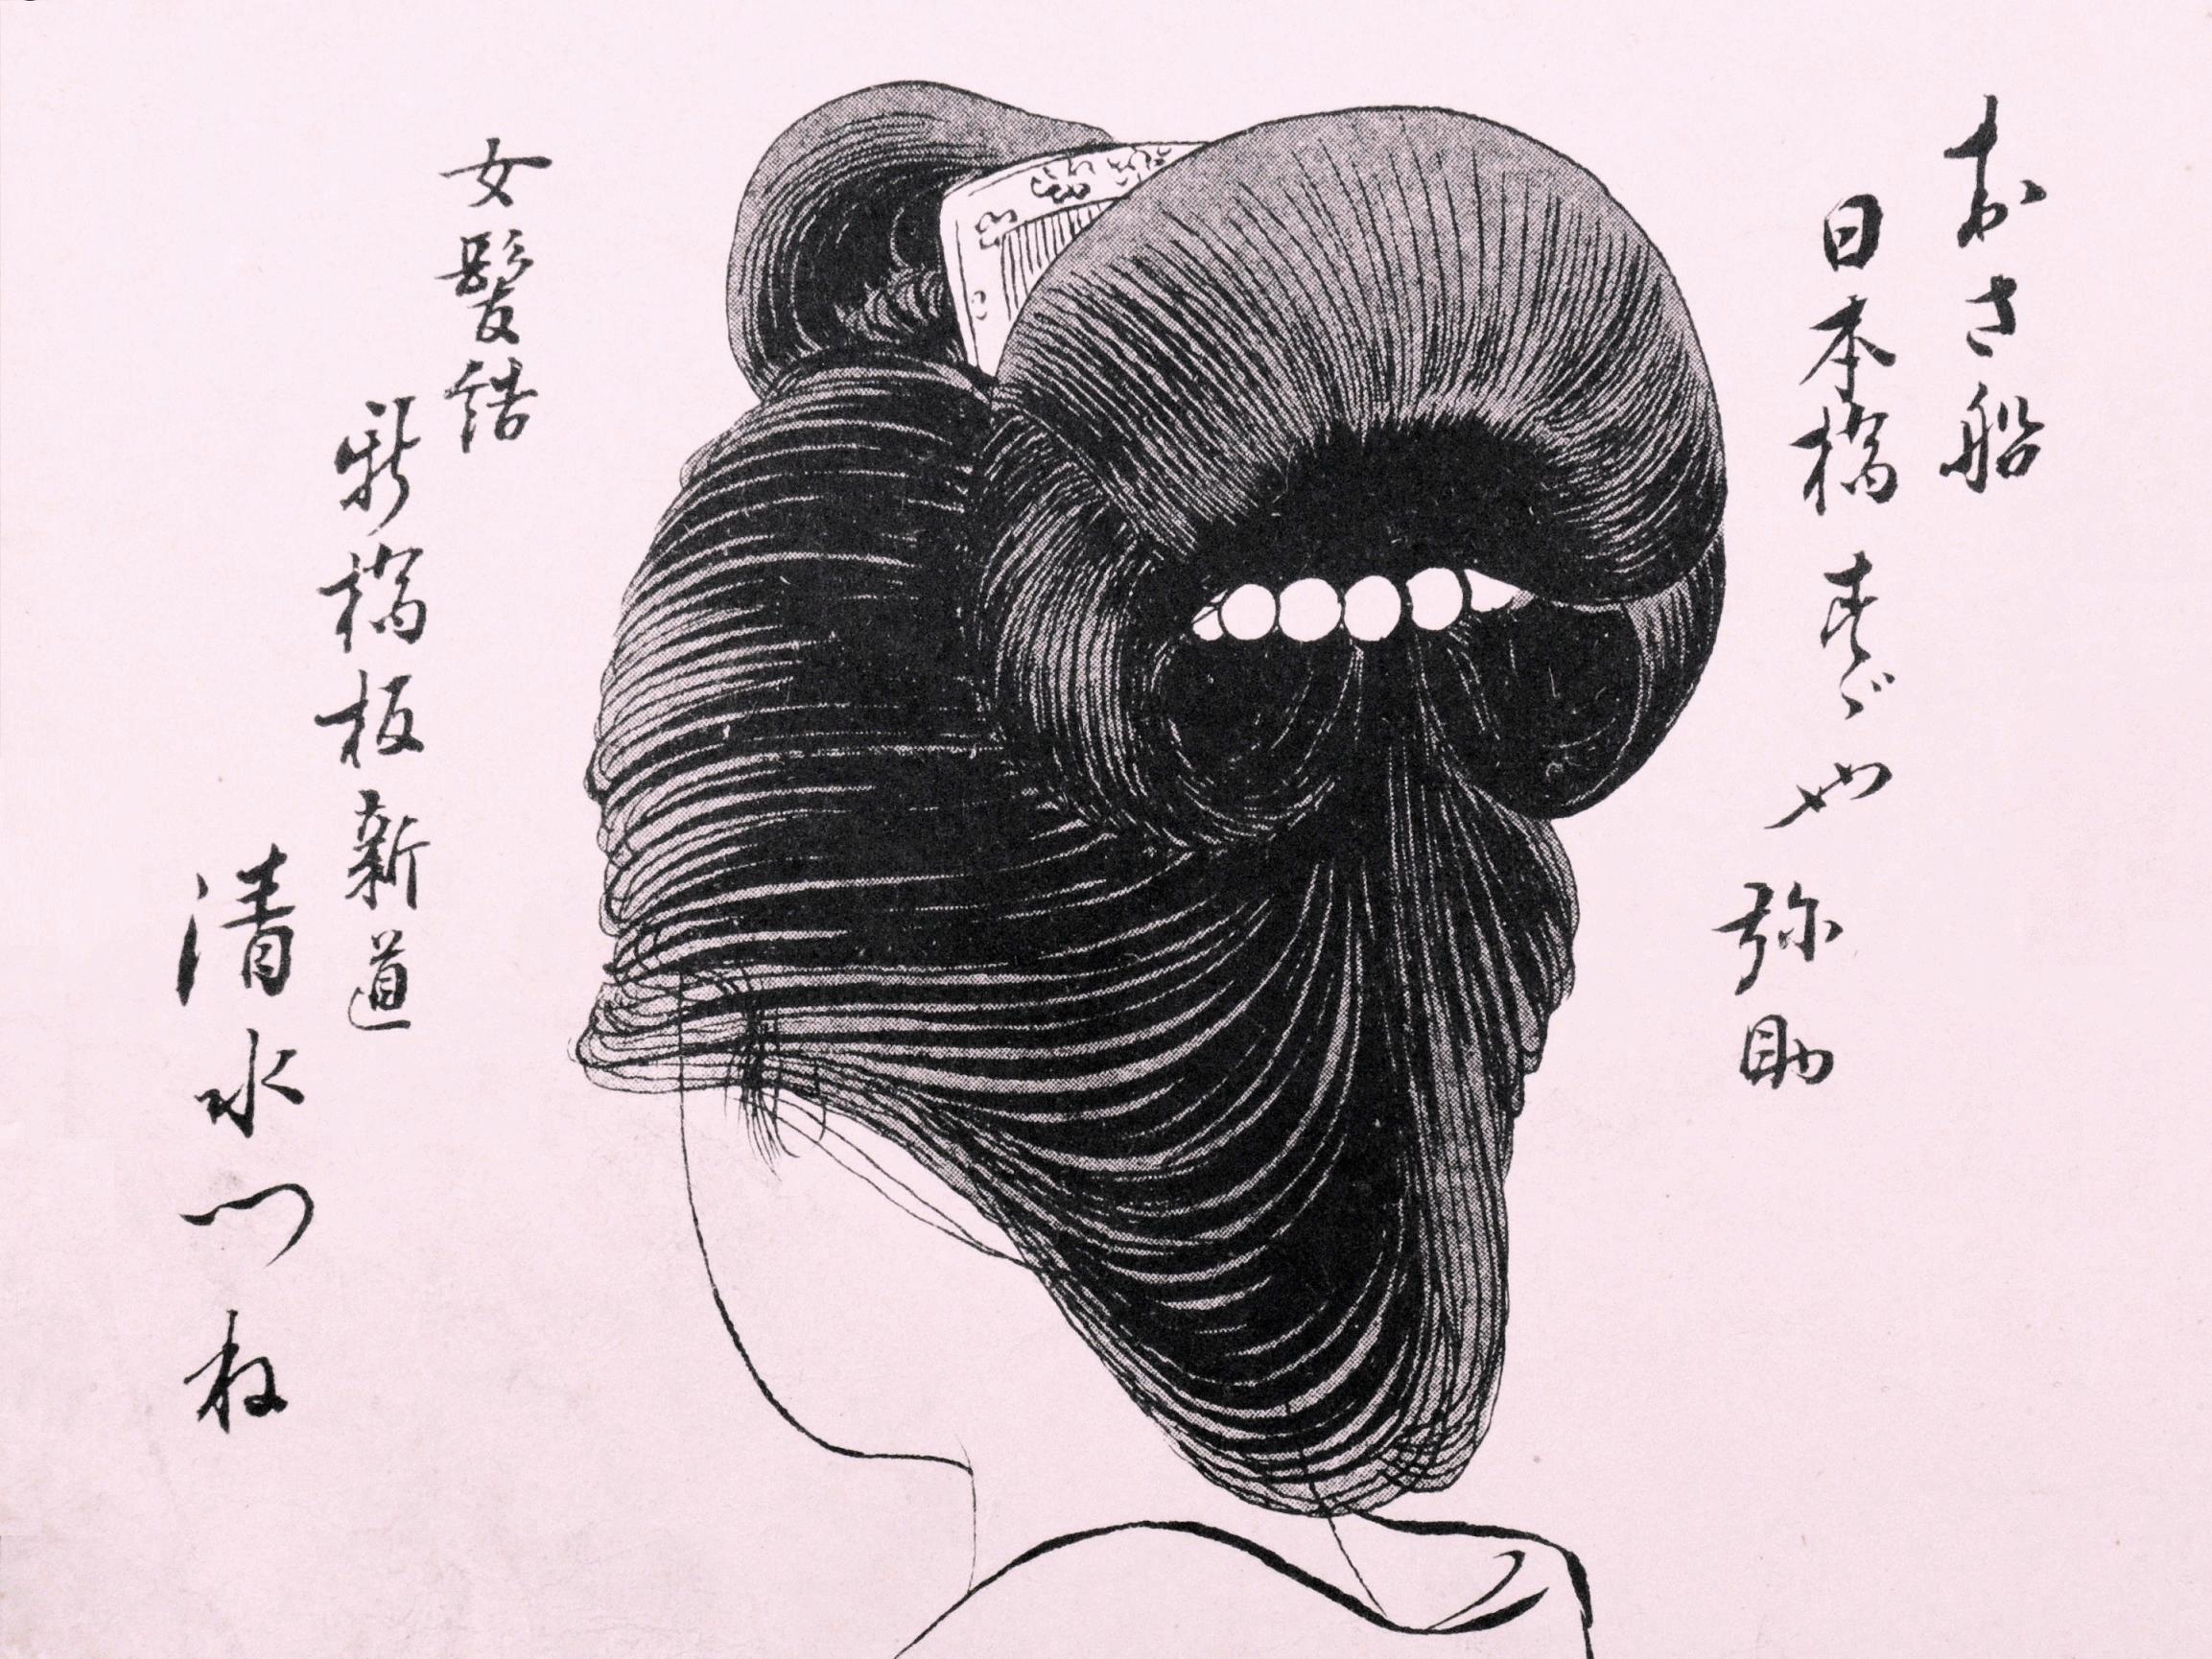 Traditional Geisha hairstyle.